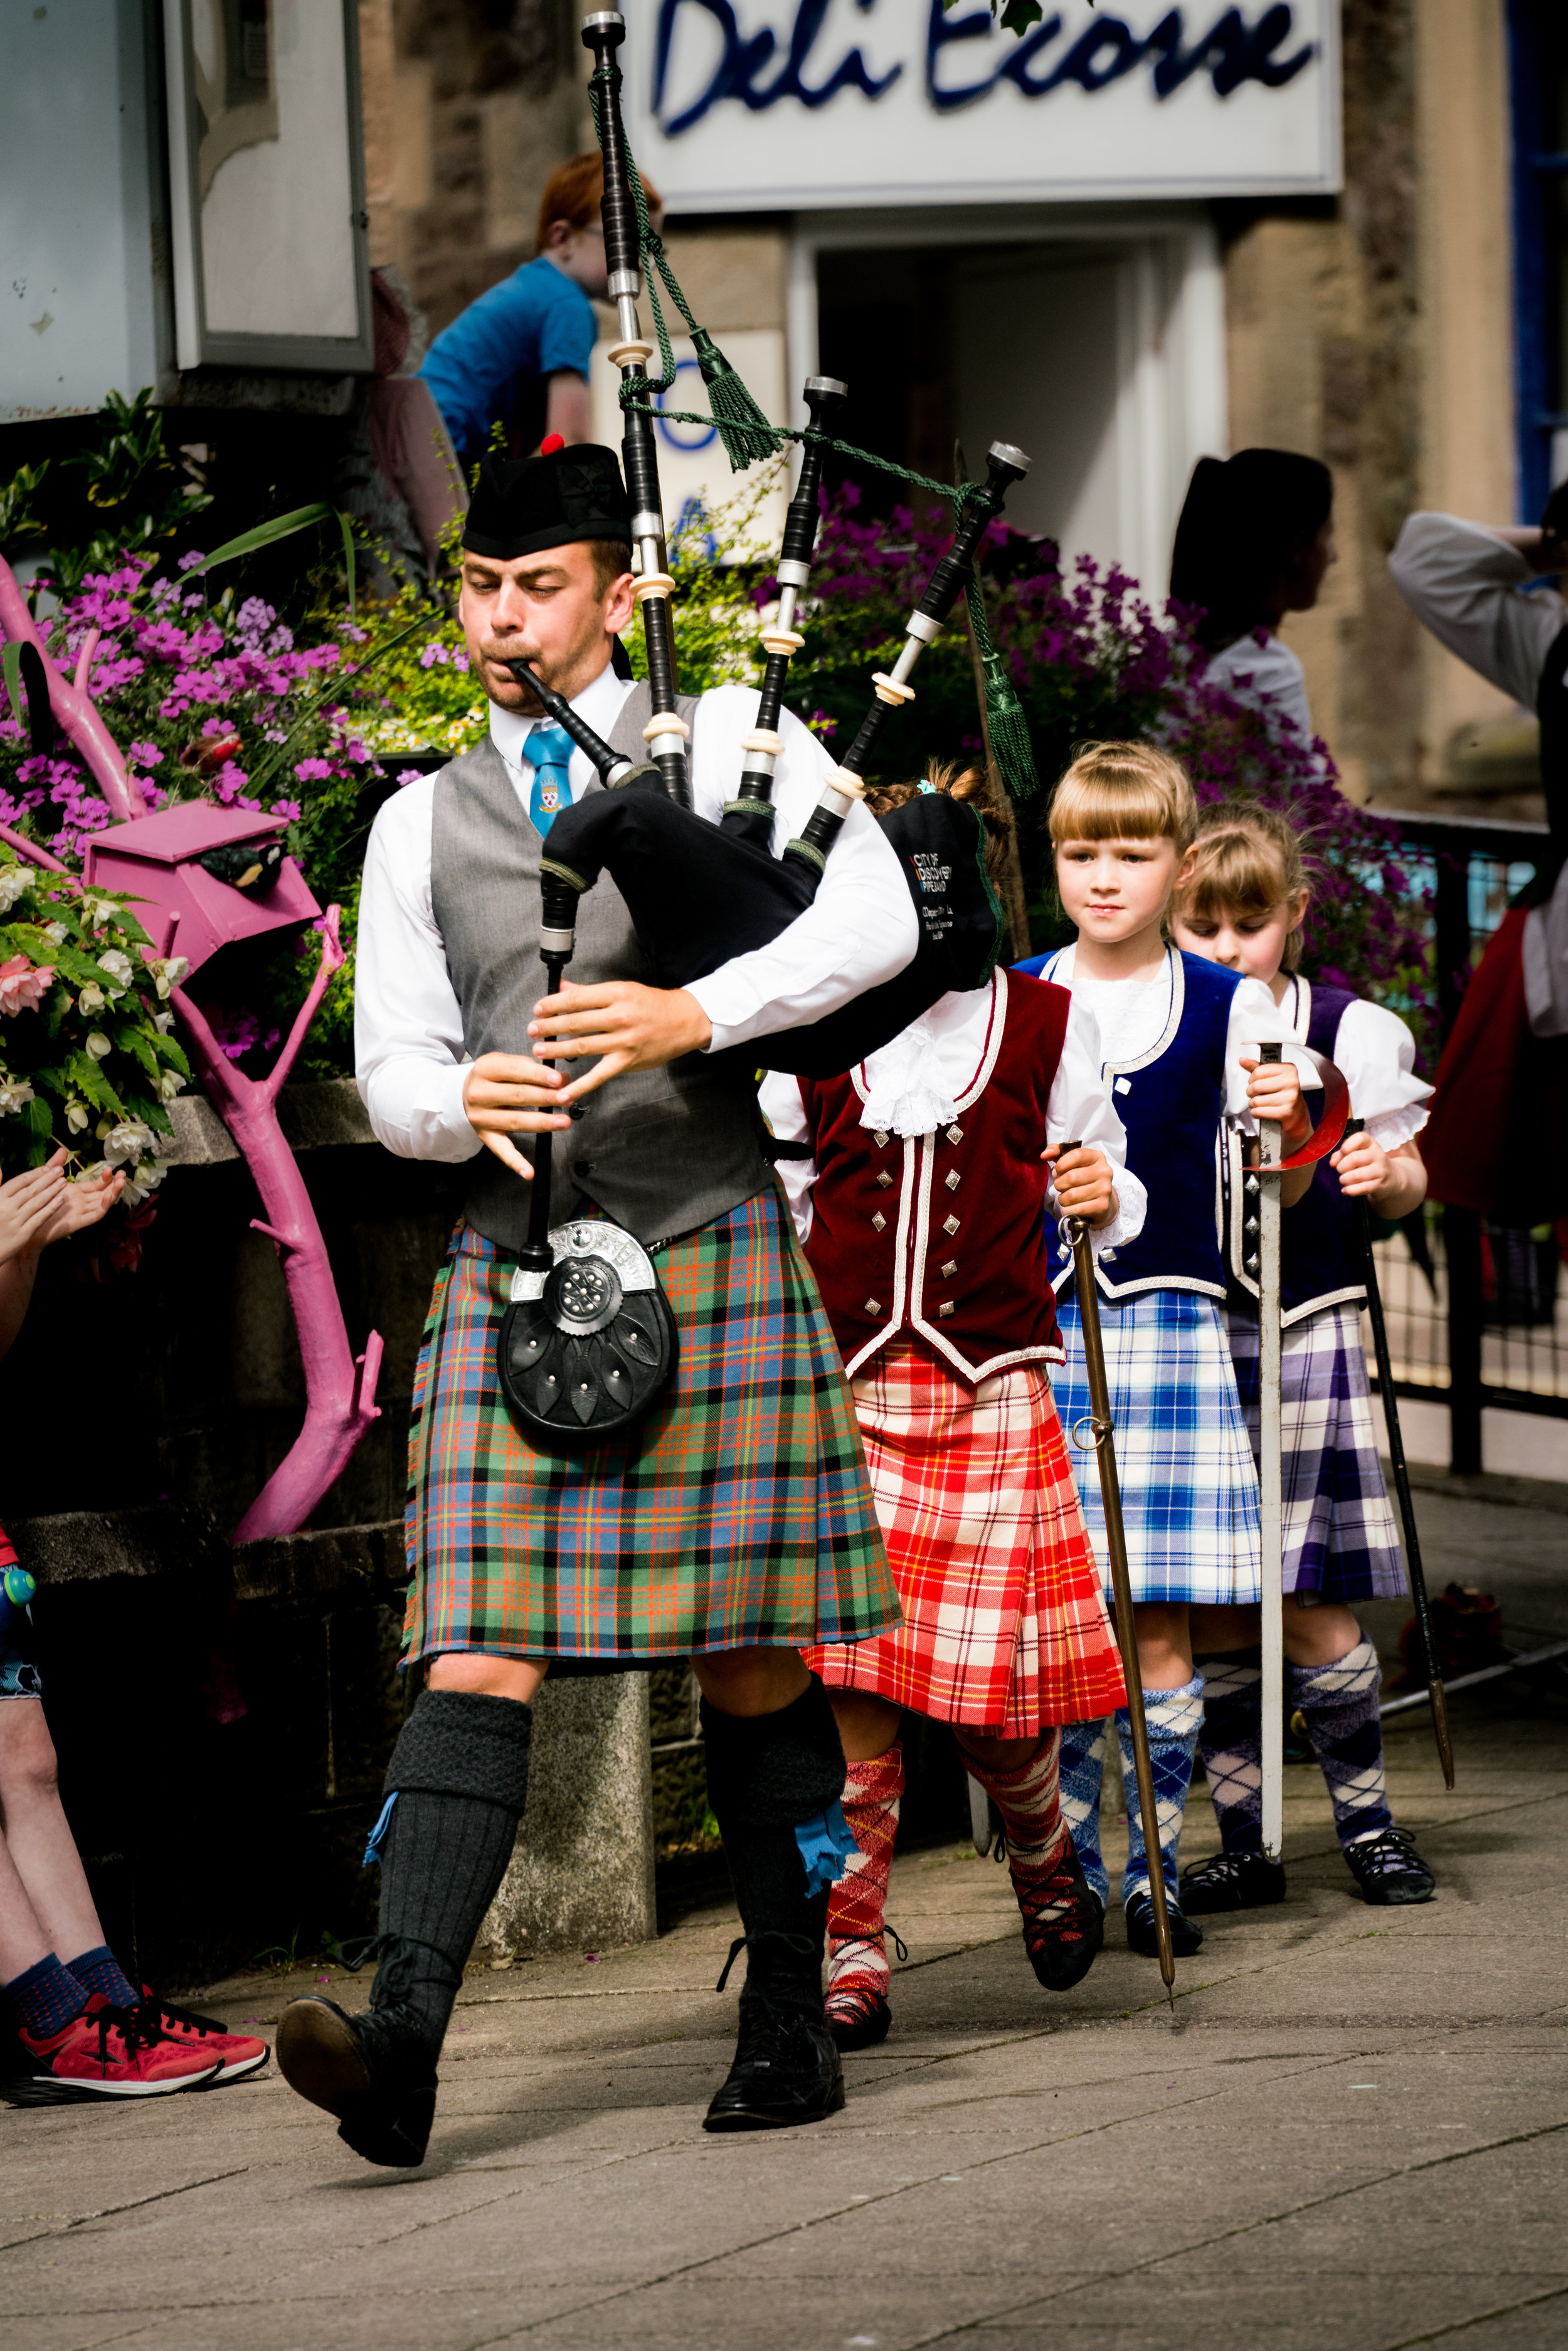 Scottish Kilt And Bagpipes